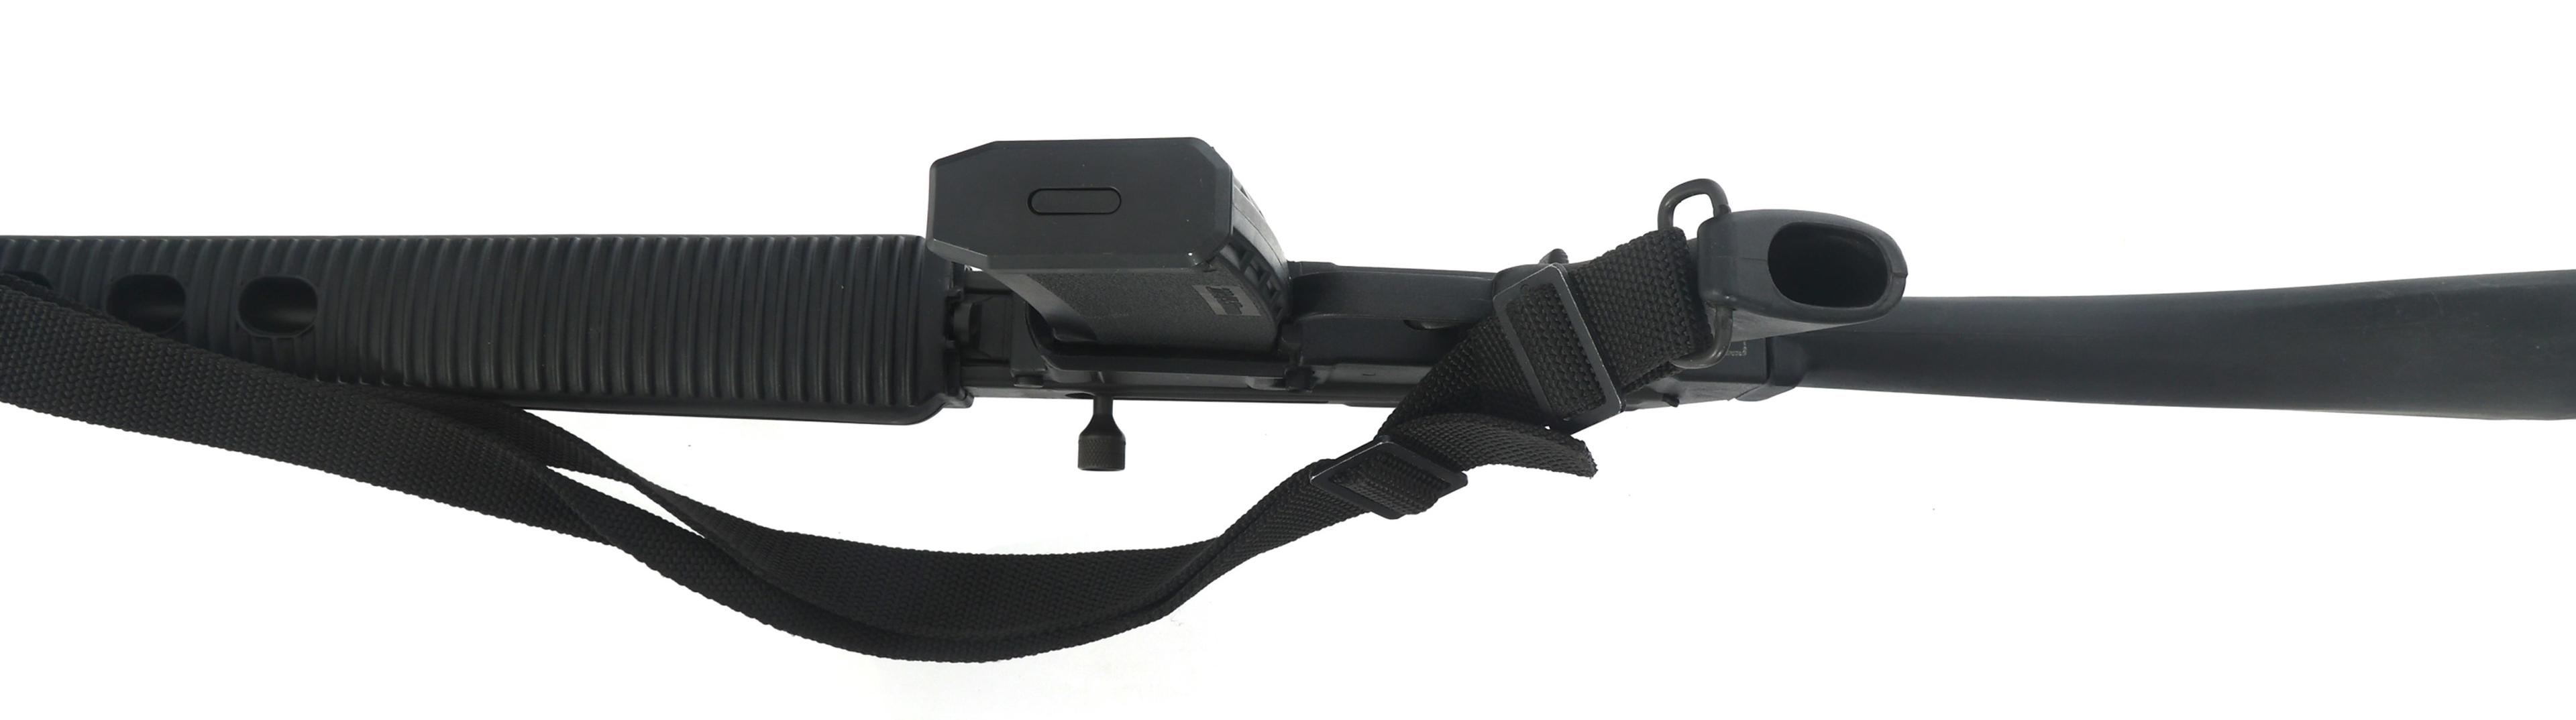 ARMALITE MODEL AR-180B 5.56x45mm CALIBER RIFLE